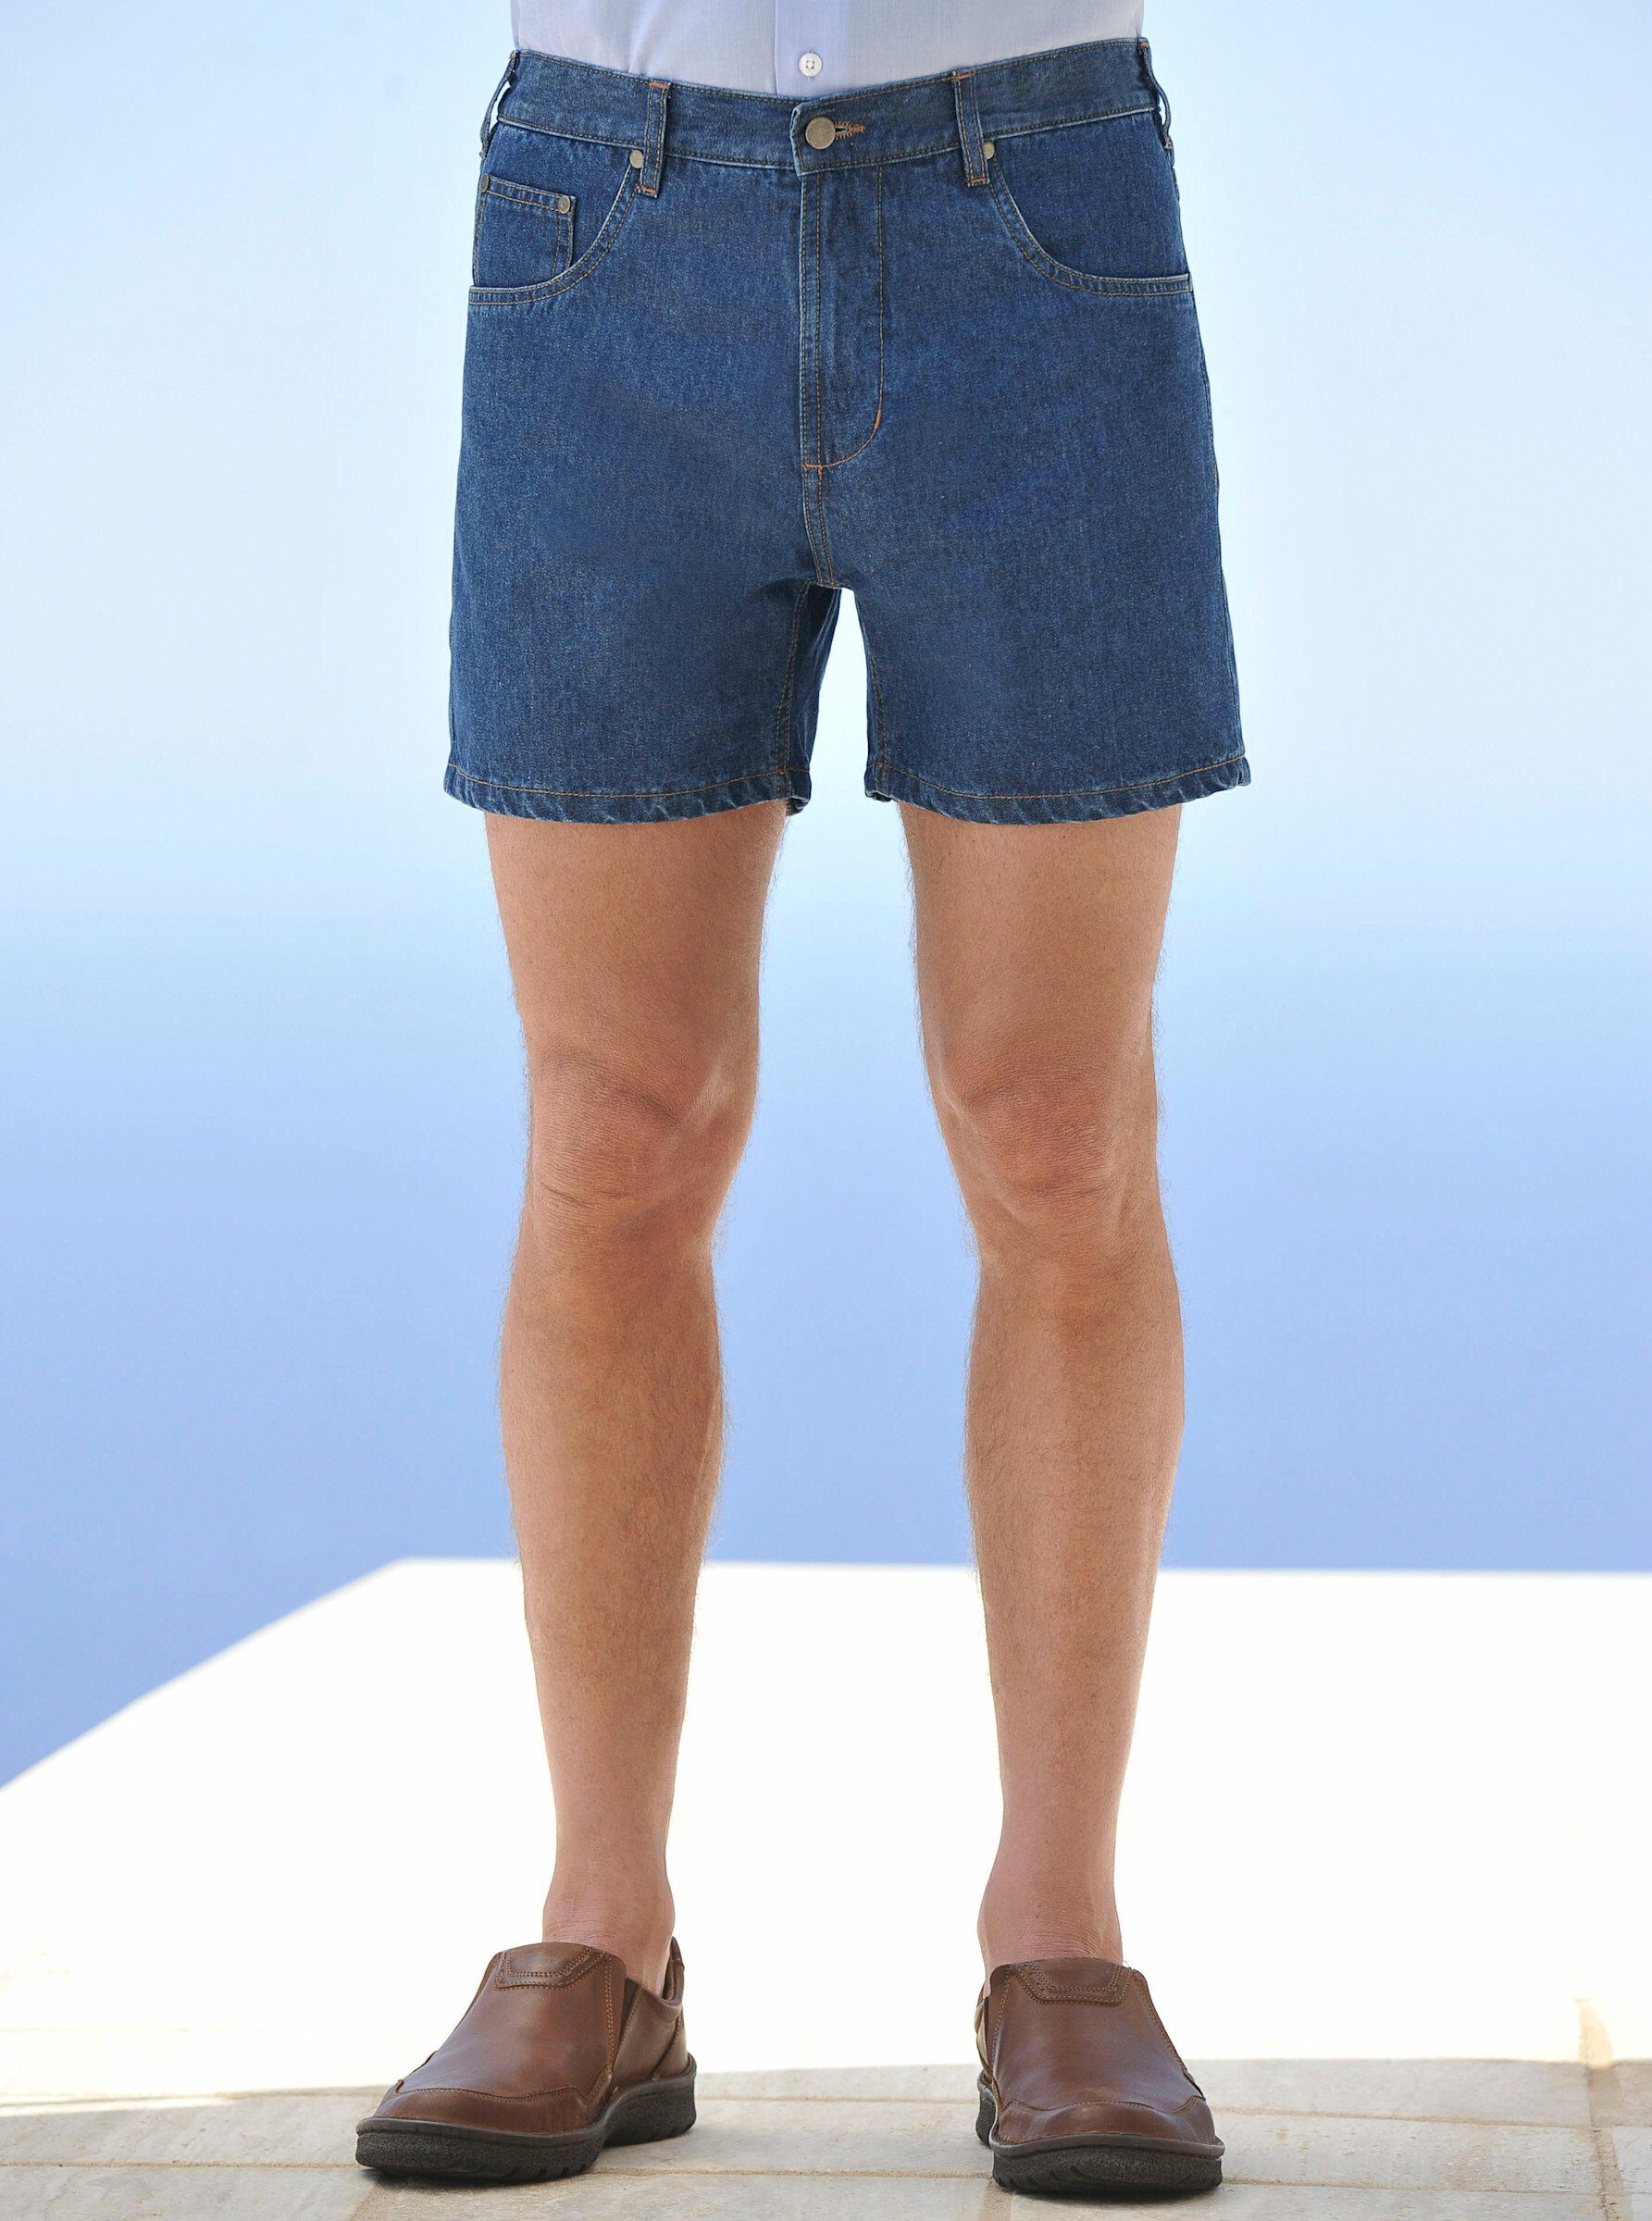 WITT WEIDEN Shorts blue-stone-washed